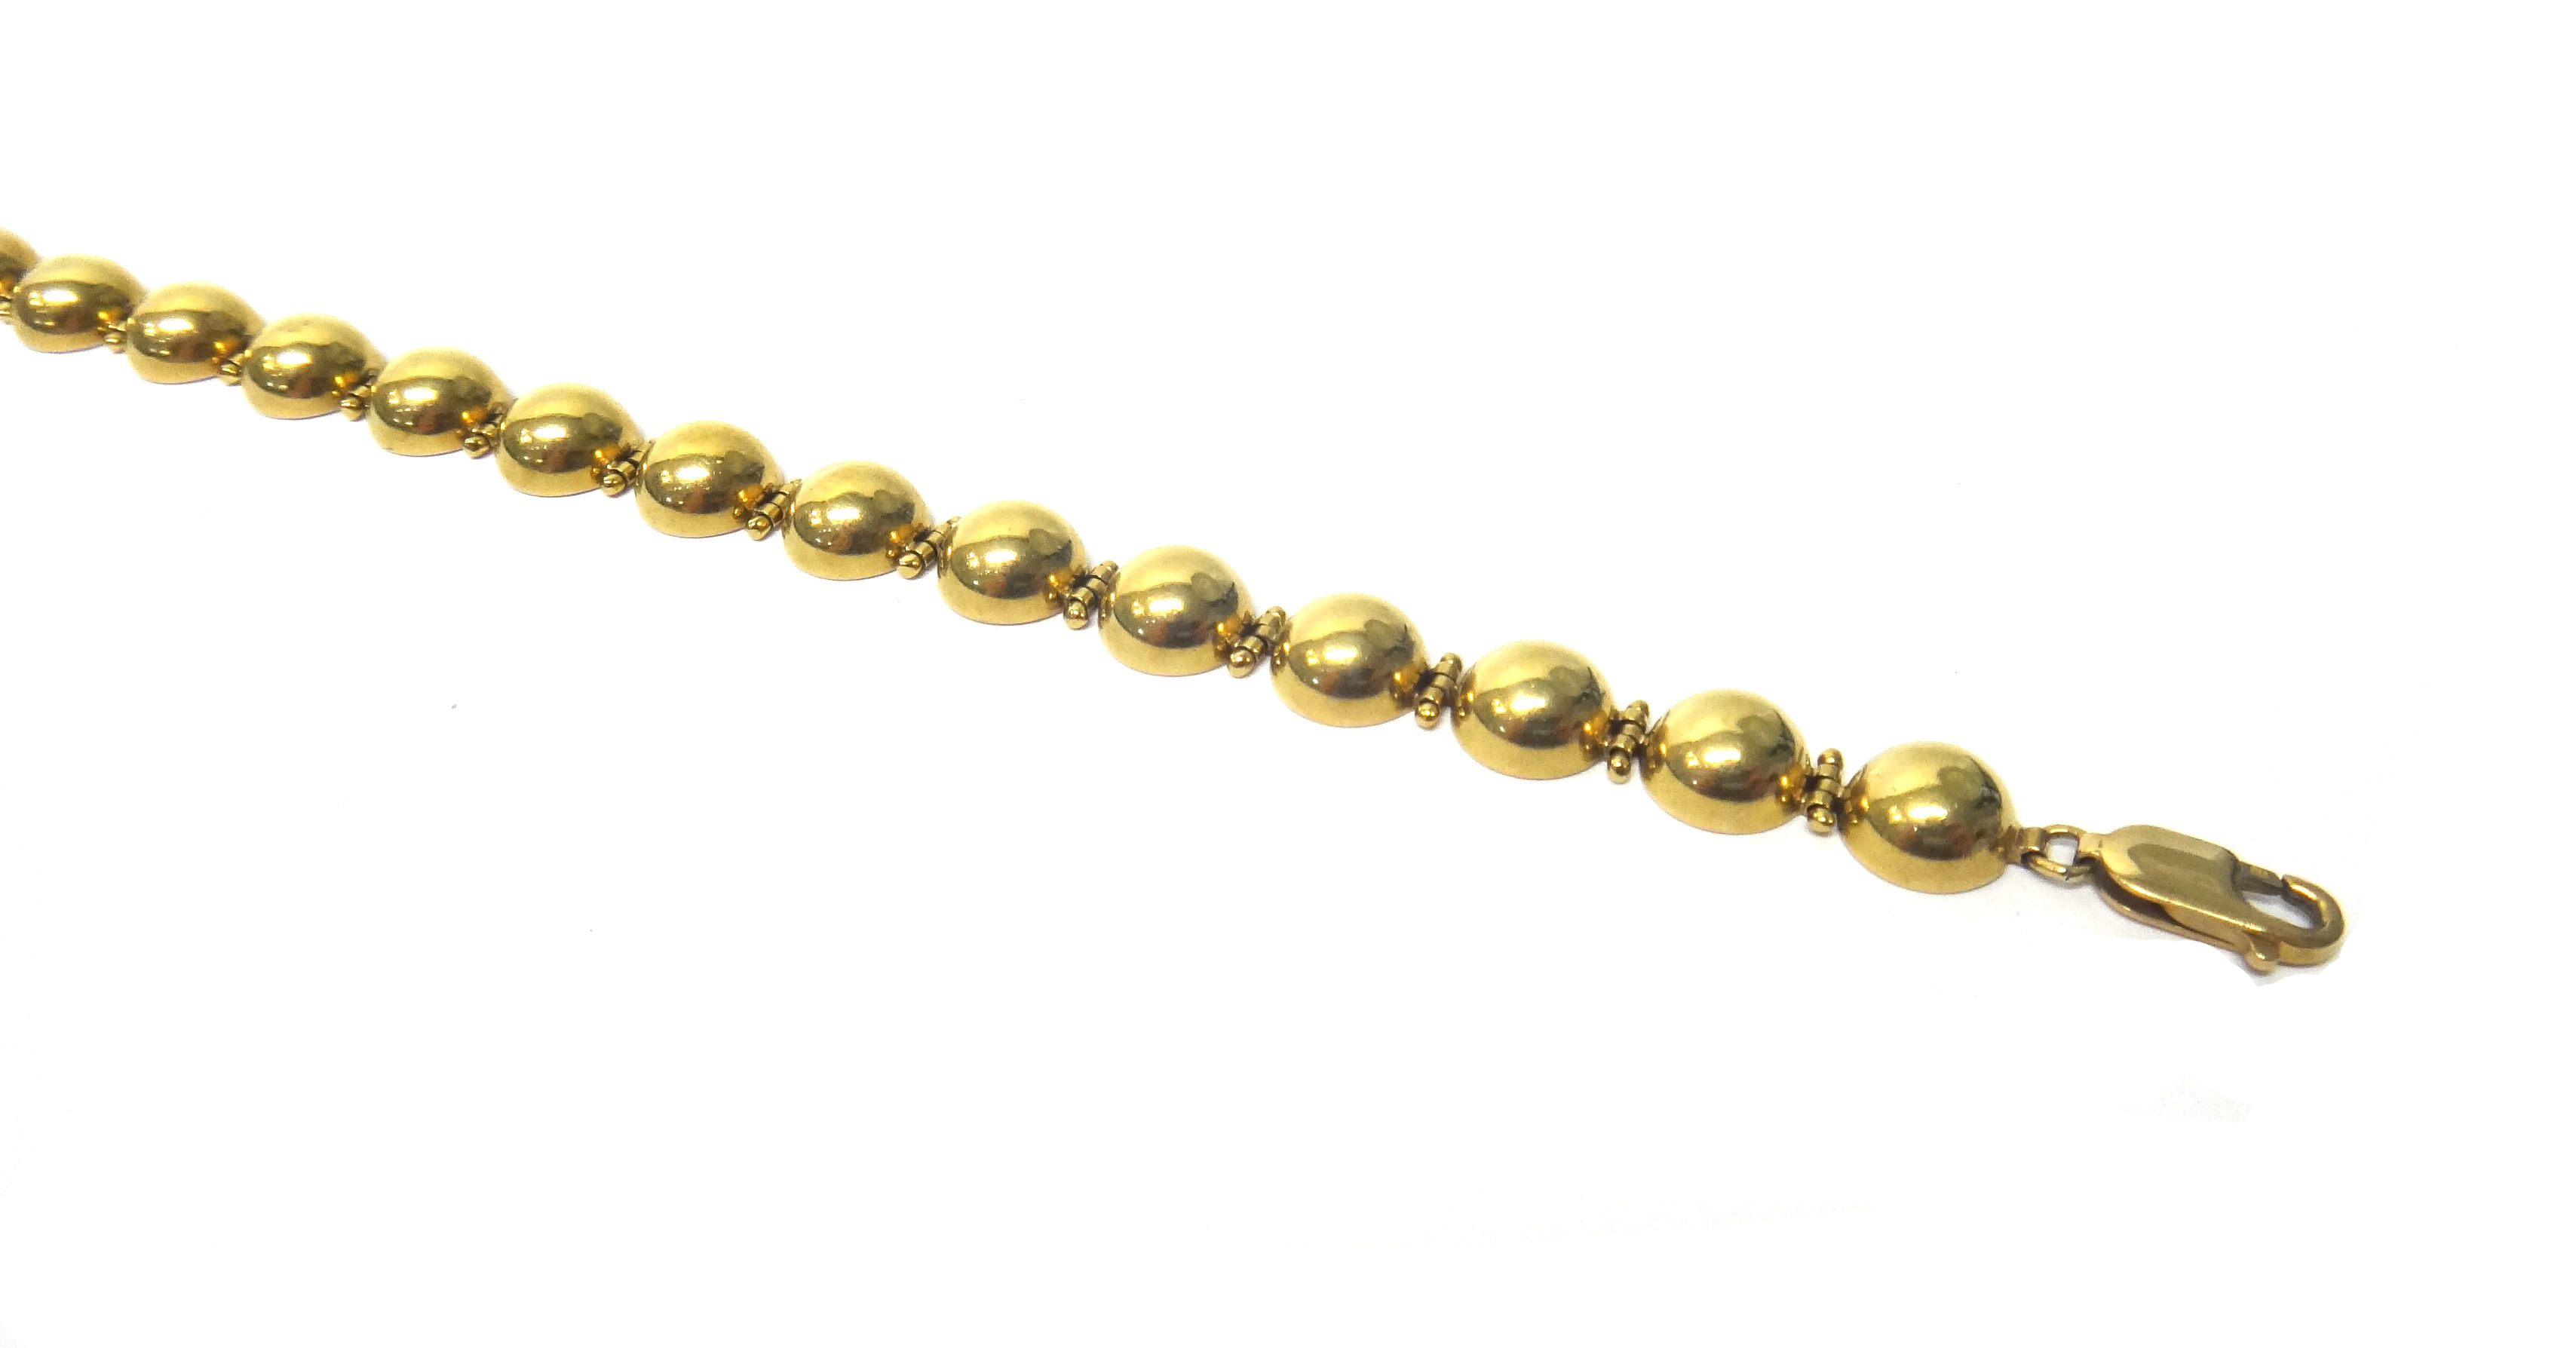 A gold bracelet, in a hemispherical link design, detailed 375, on a sprung hook shaped clasp,